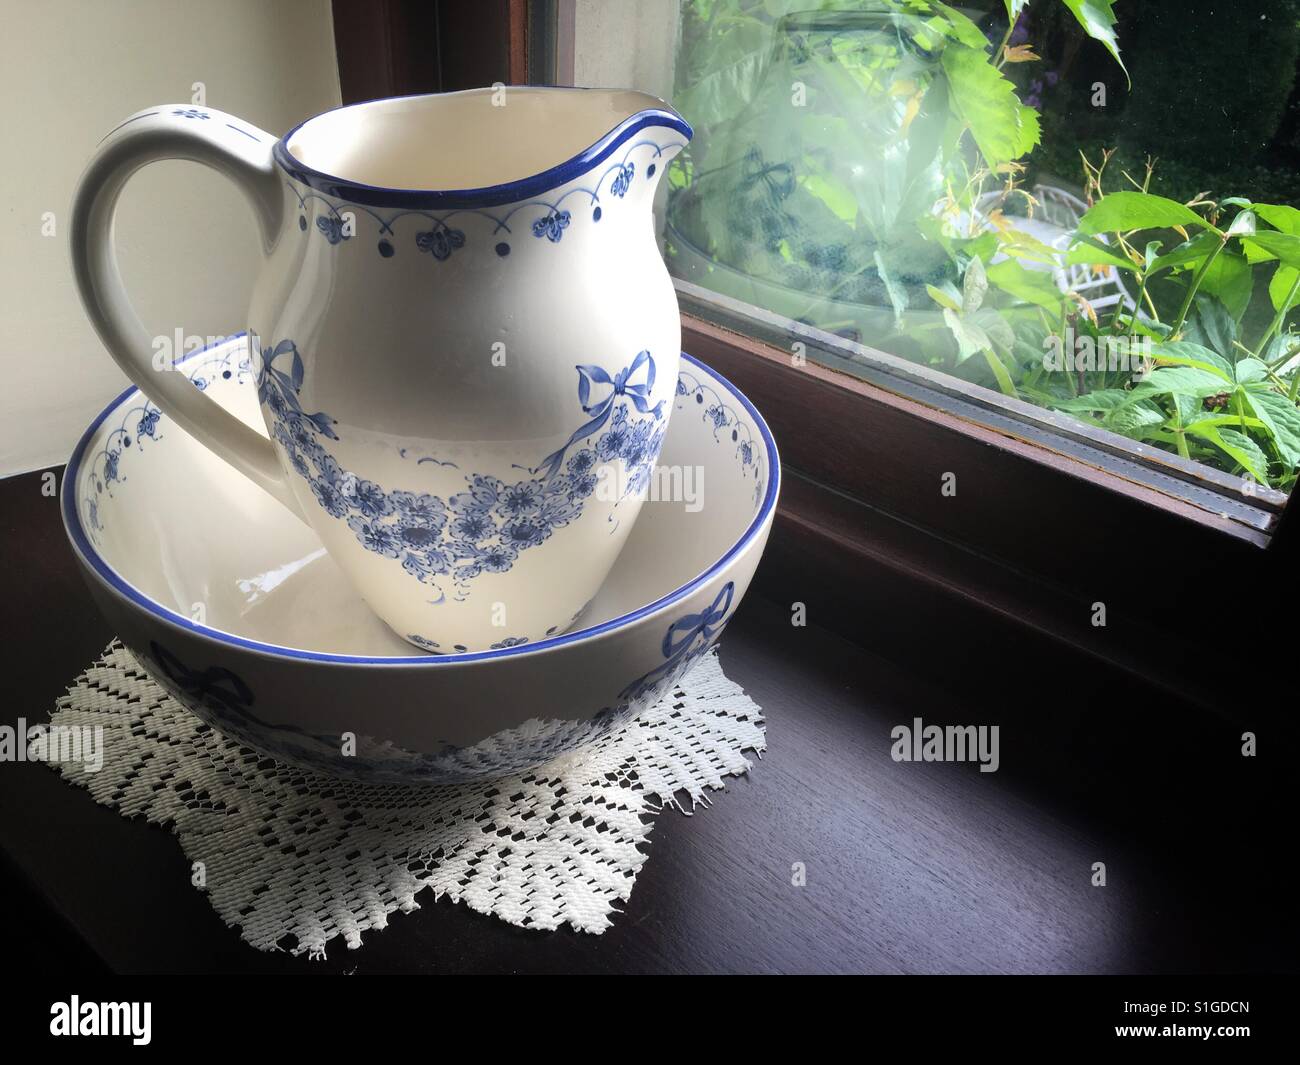 Wash jug and bowl Stock Photo - Alamy